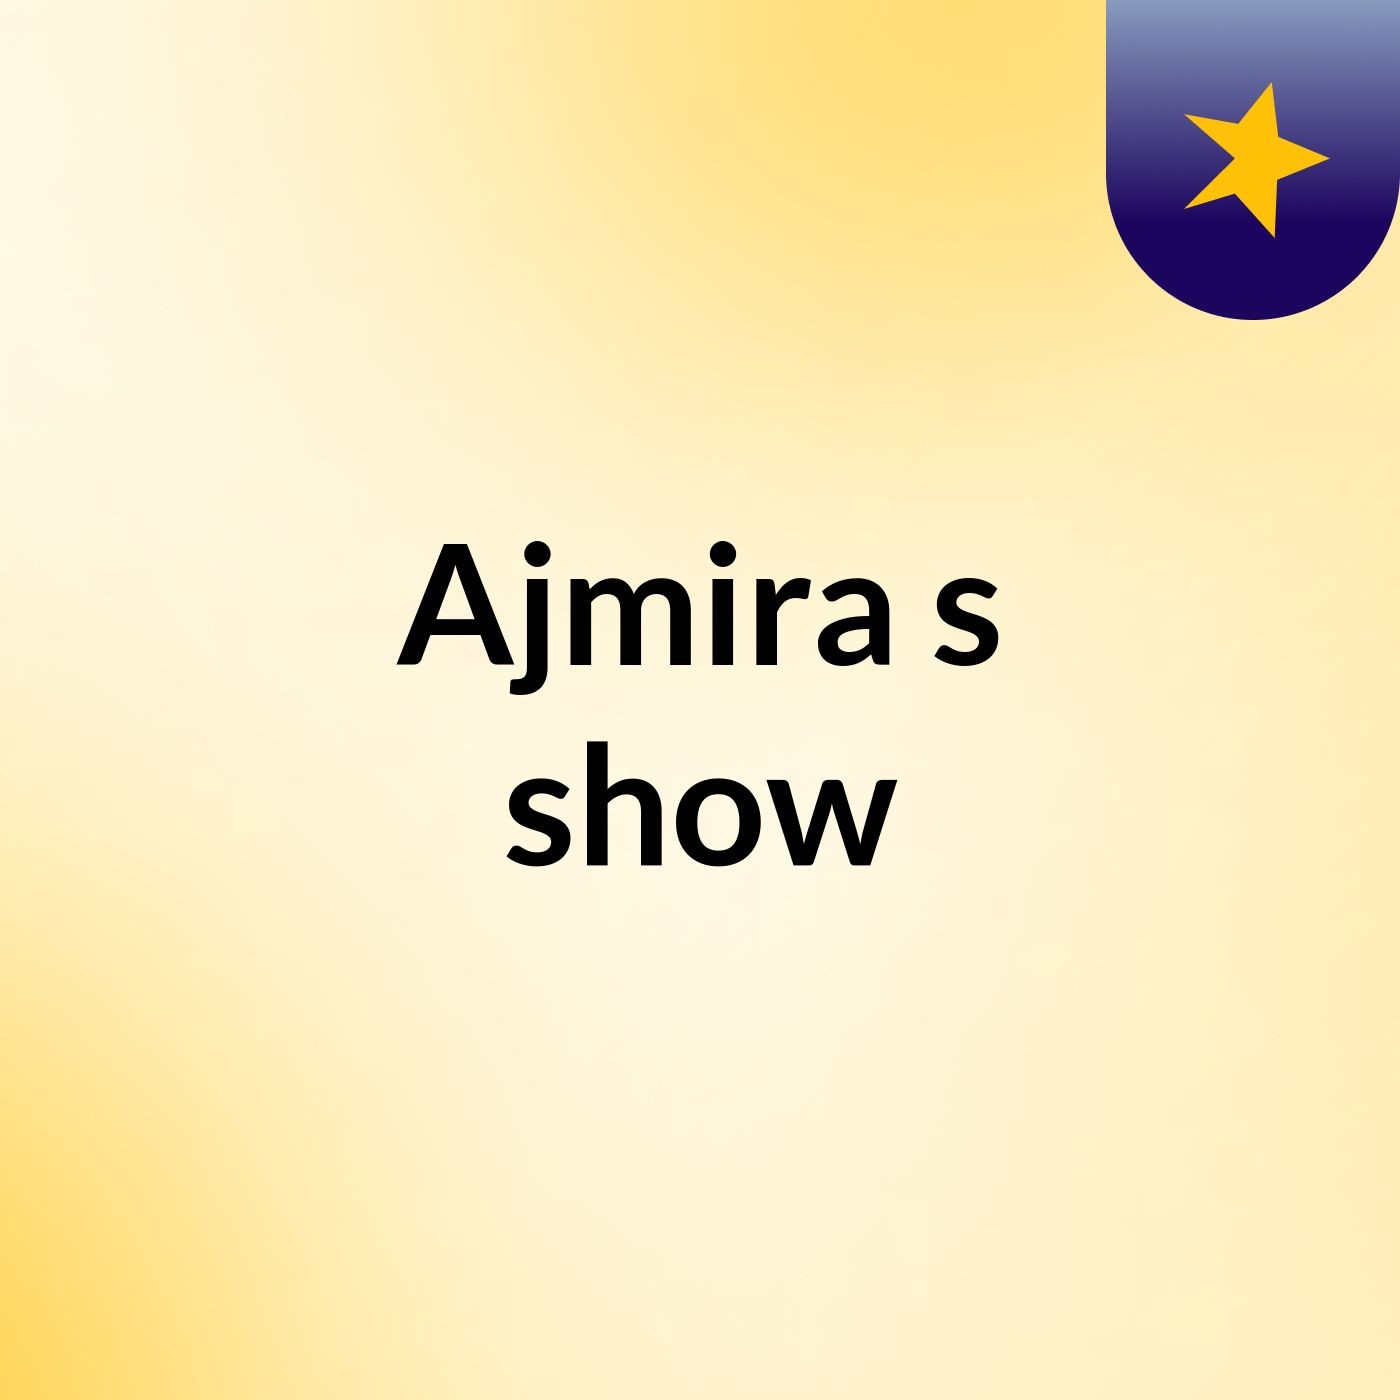 Ajmira's show